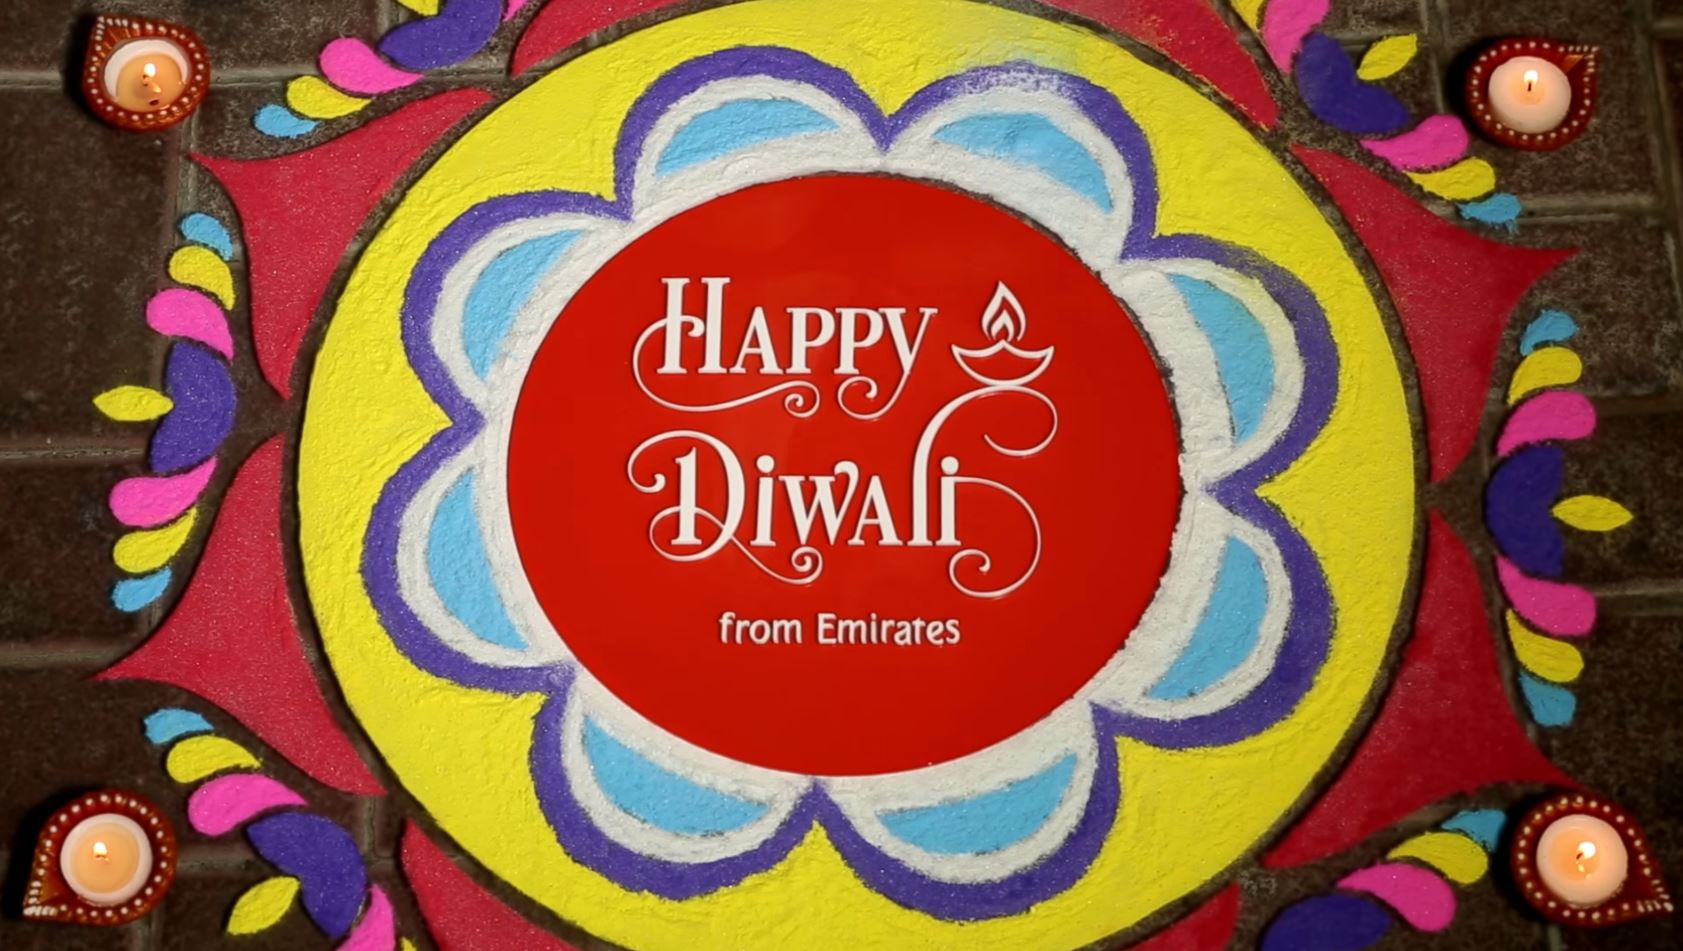 Emirates Celebrates Diwali